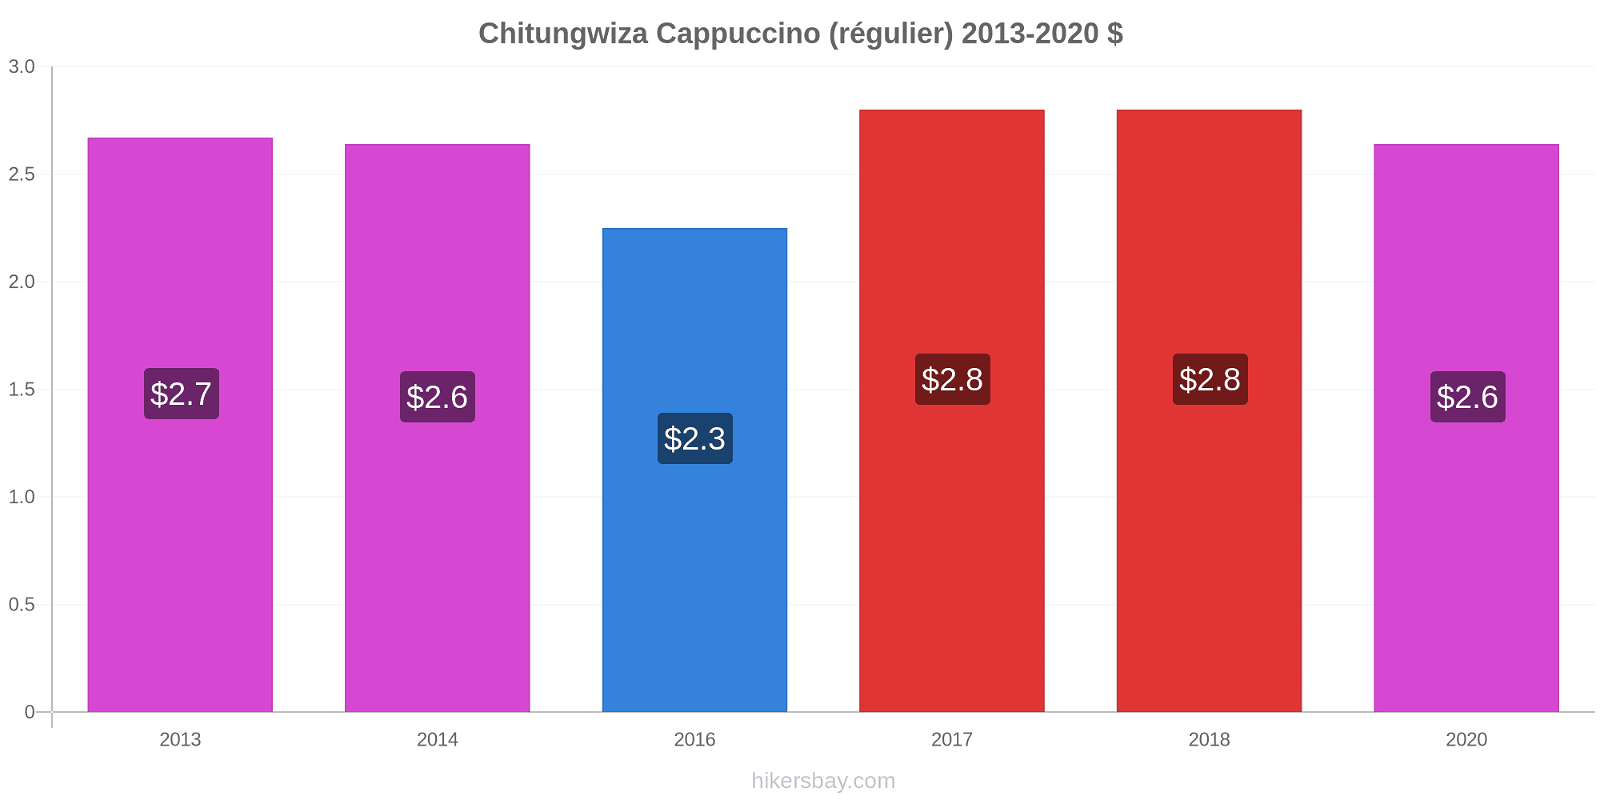 Chitungwiza changements de prix Cappuccino (régulier) hikersbay.com